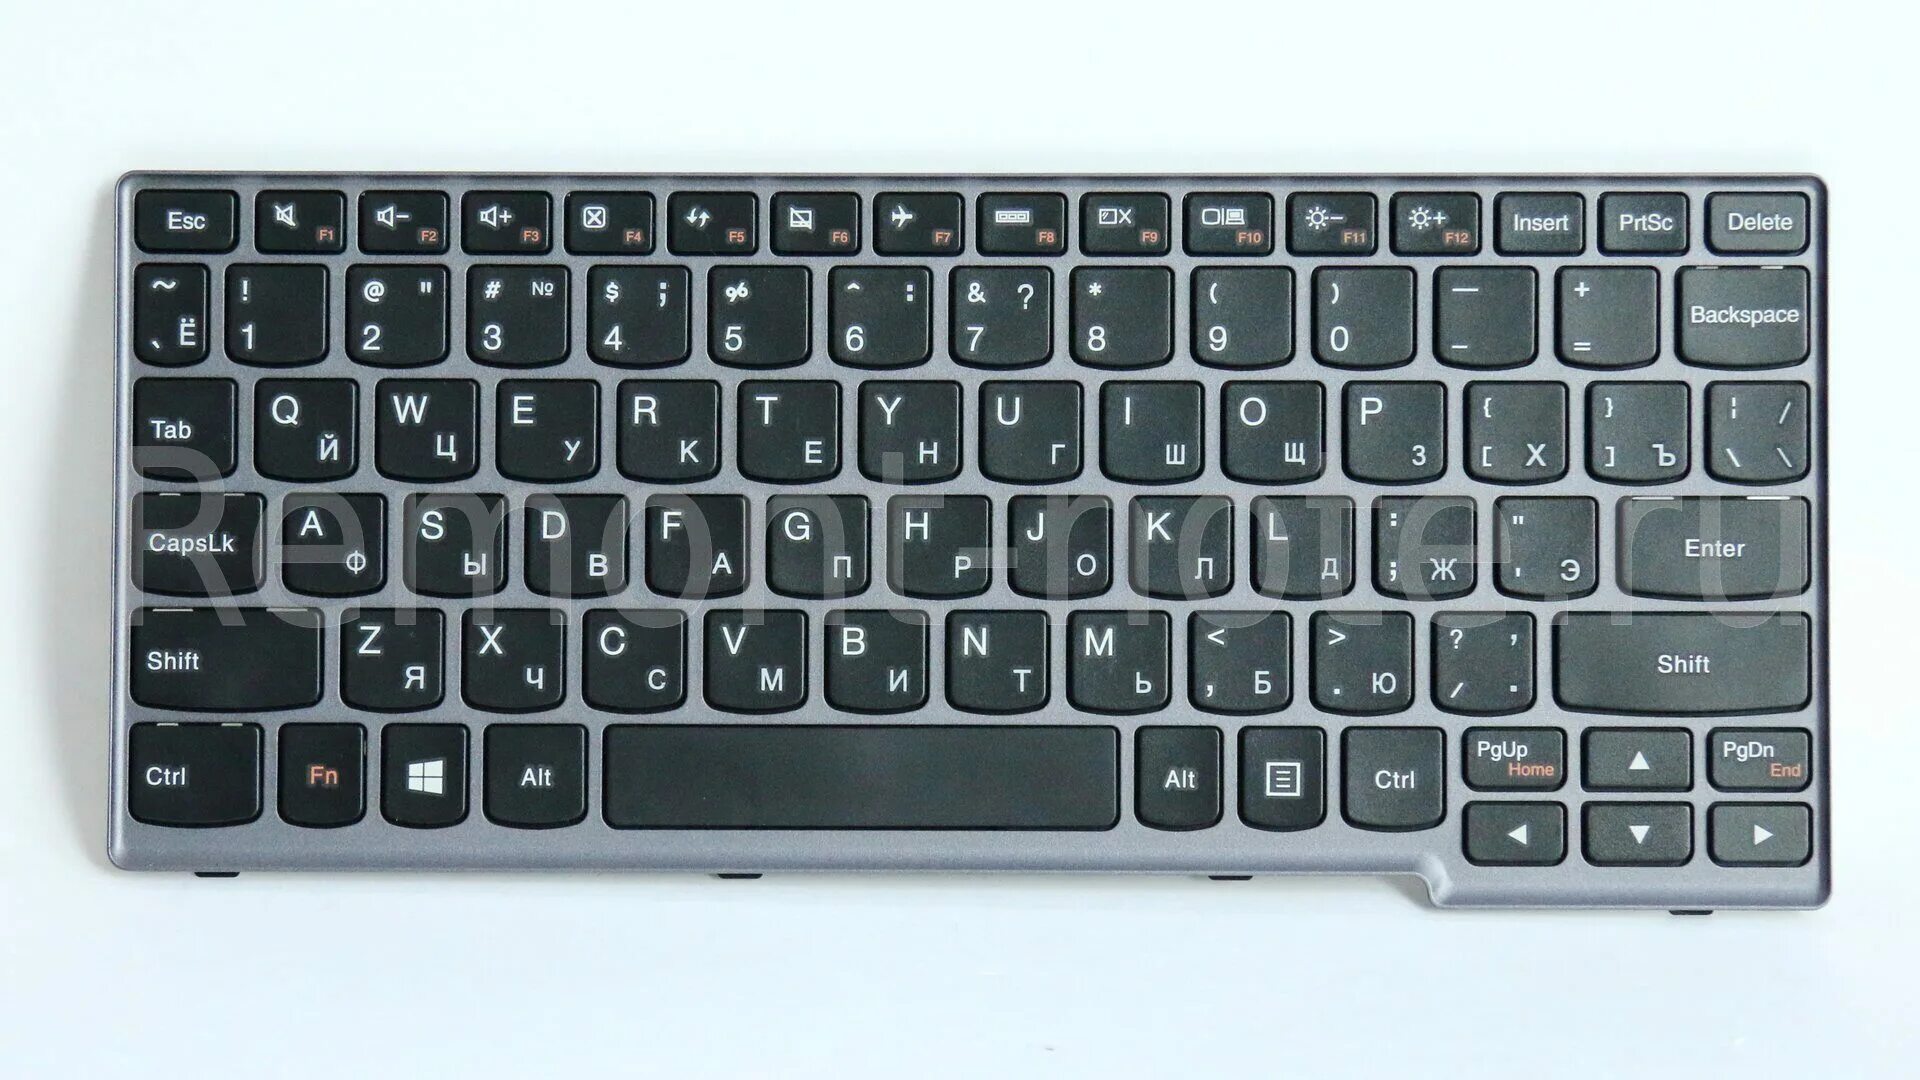 Русско английский компьютерная клавиатура. Клавиатура ноутбука фото. Компьютерная клавиатура фото крупным планом. Русско-английская клавиатура компьютера фото. Снимок клавиатуры ноутбука.